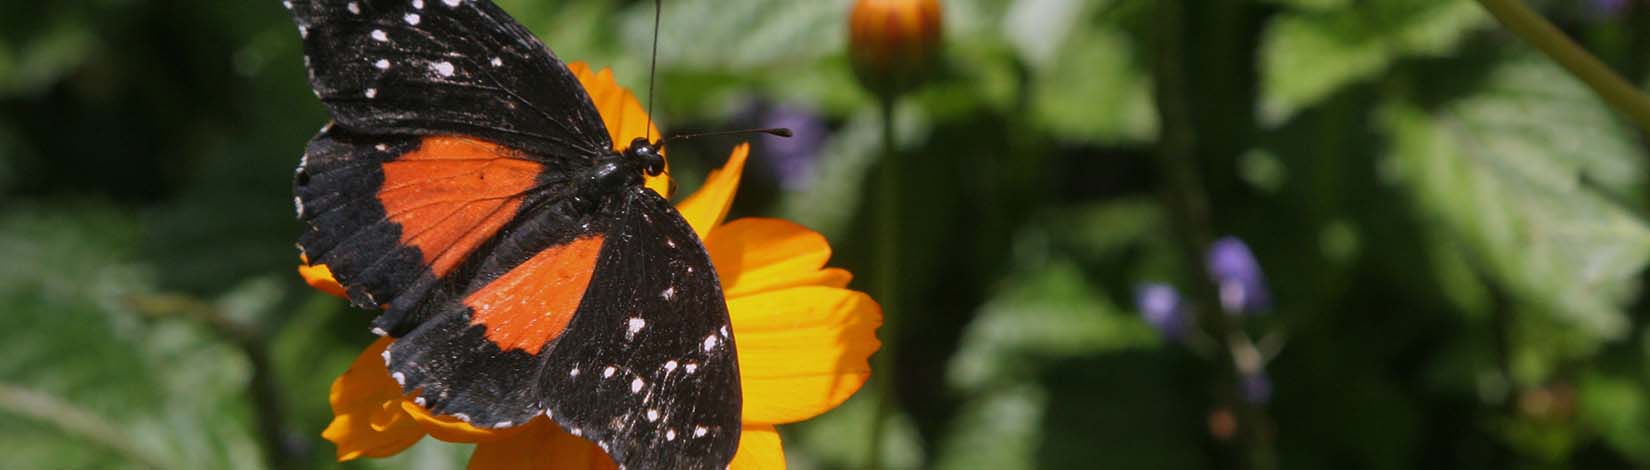 Butterfly on a flower in a Florida butterfly garden